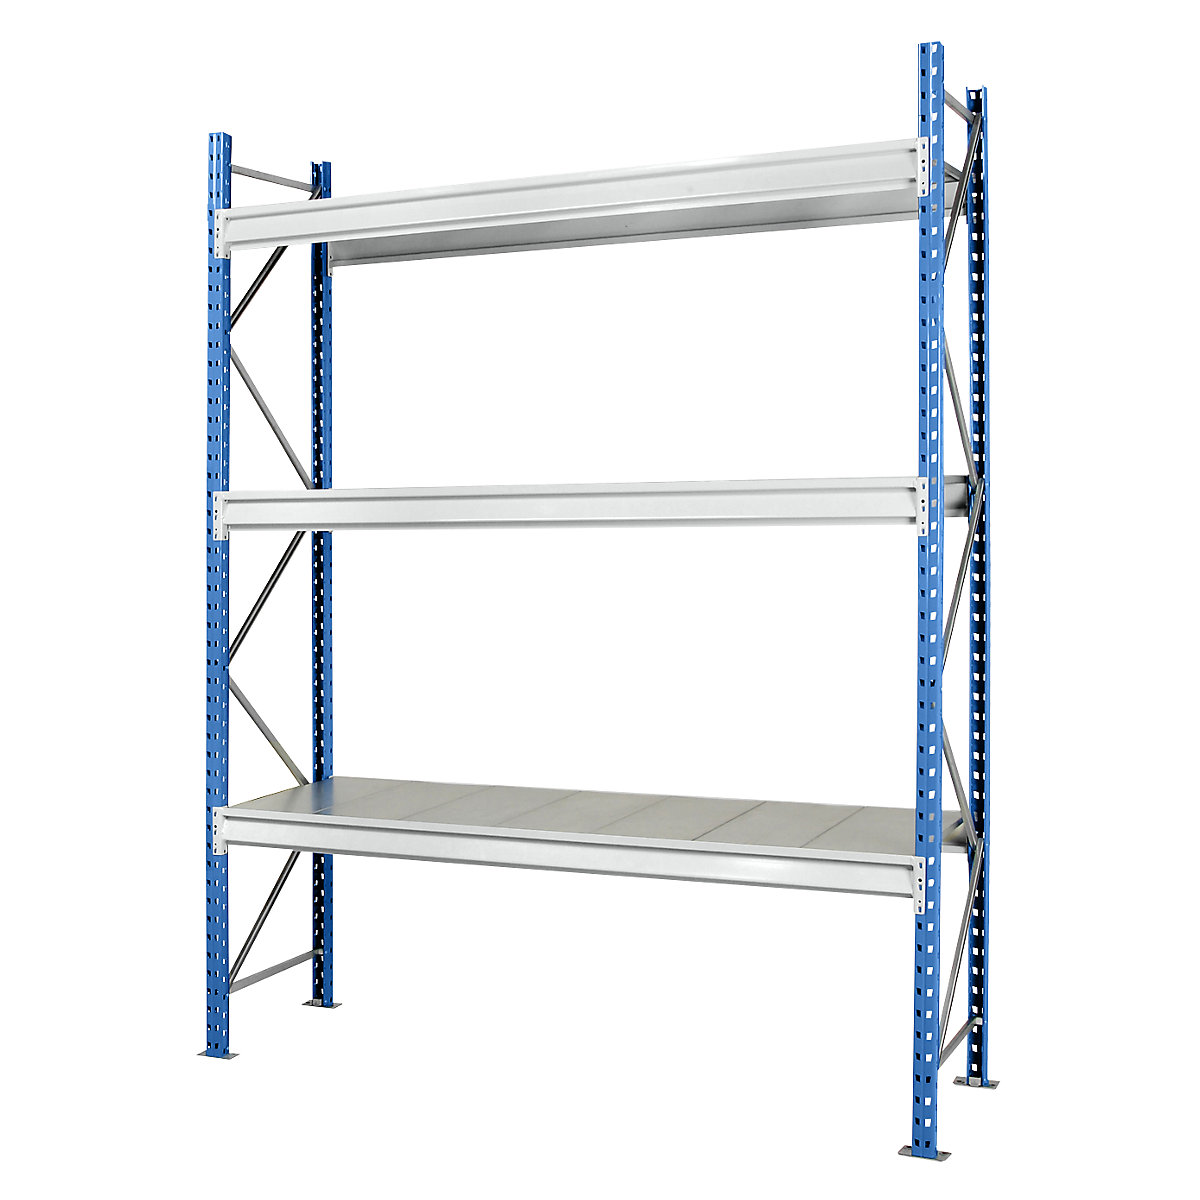 Heavy duty wide span shelving with steel shelf panels, frame colour blue, HxWxD 2496 x 2410 x 1000 mm, standard shelf unit-11